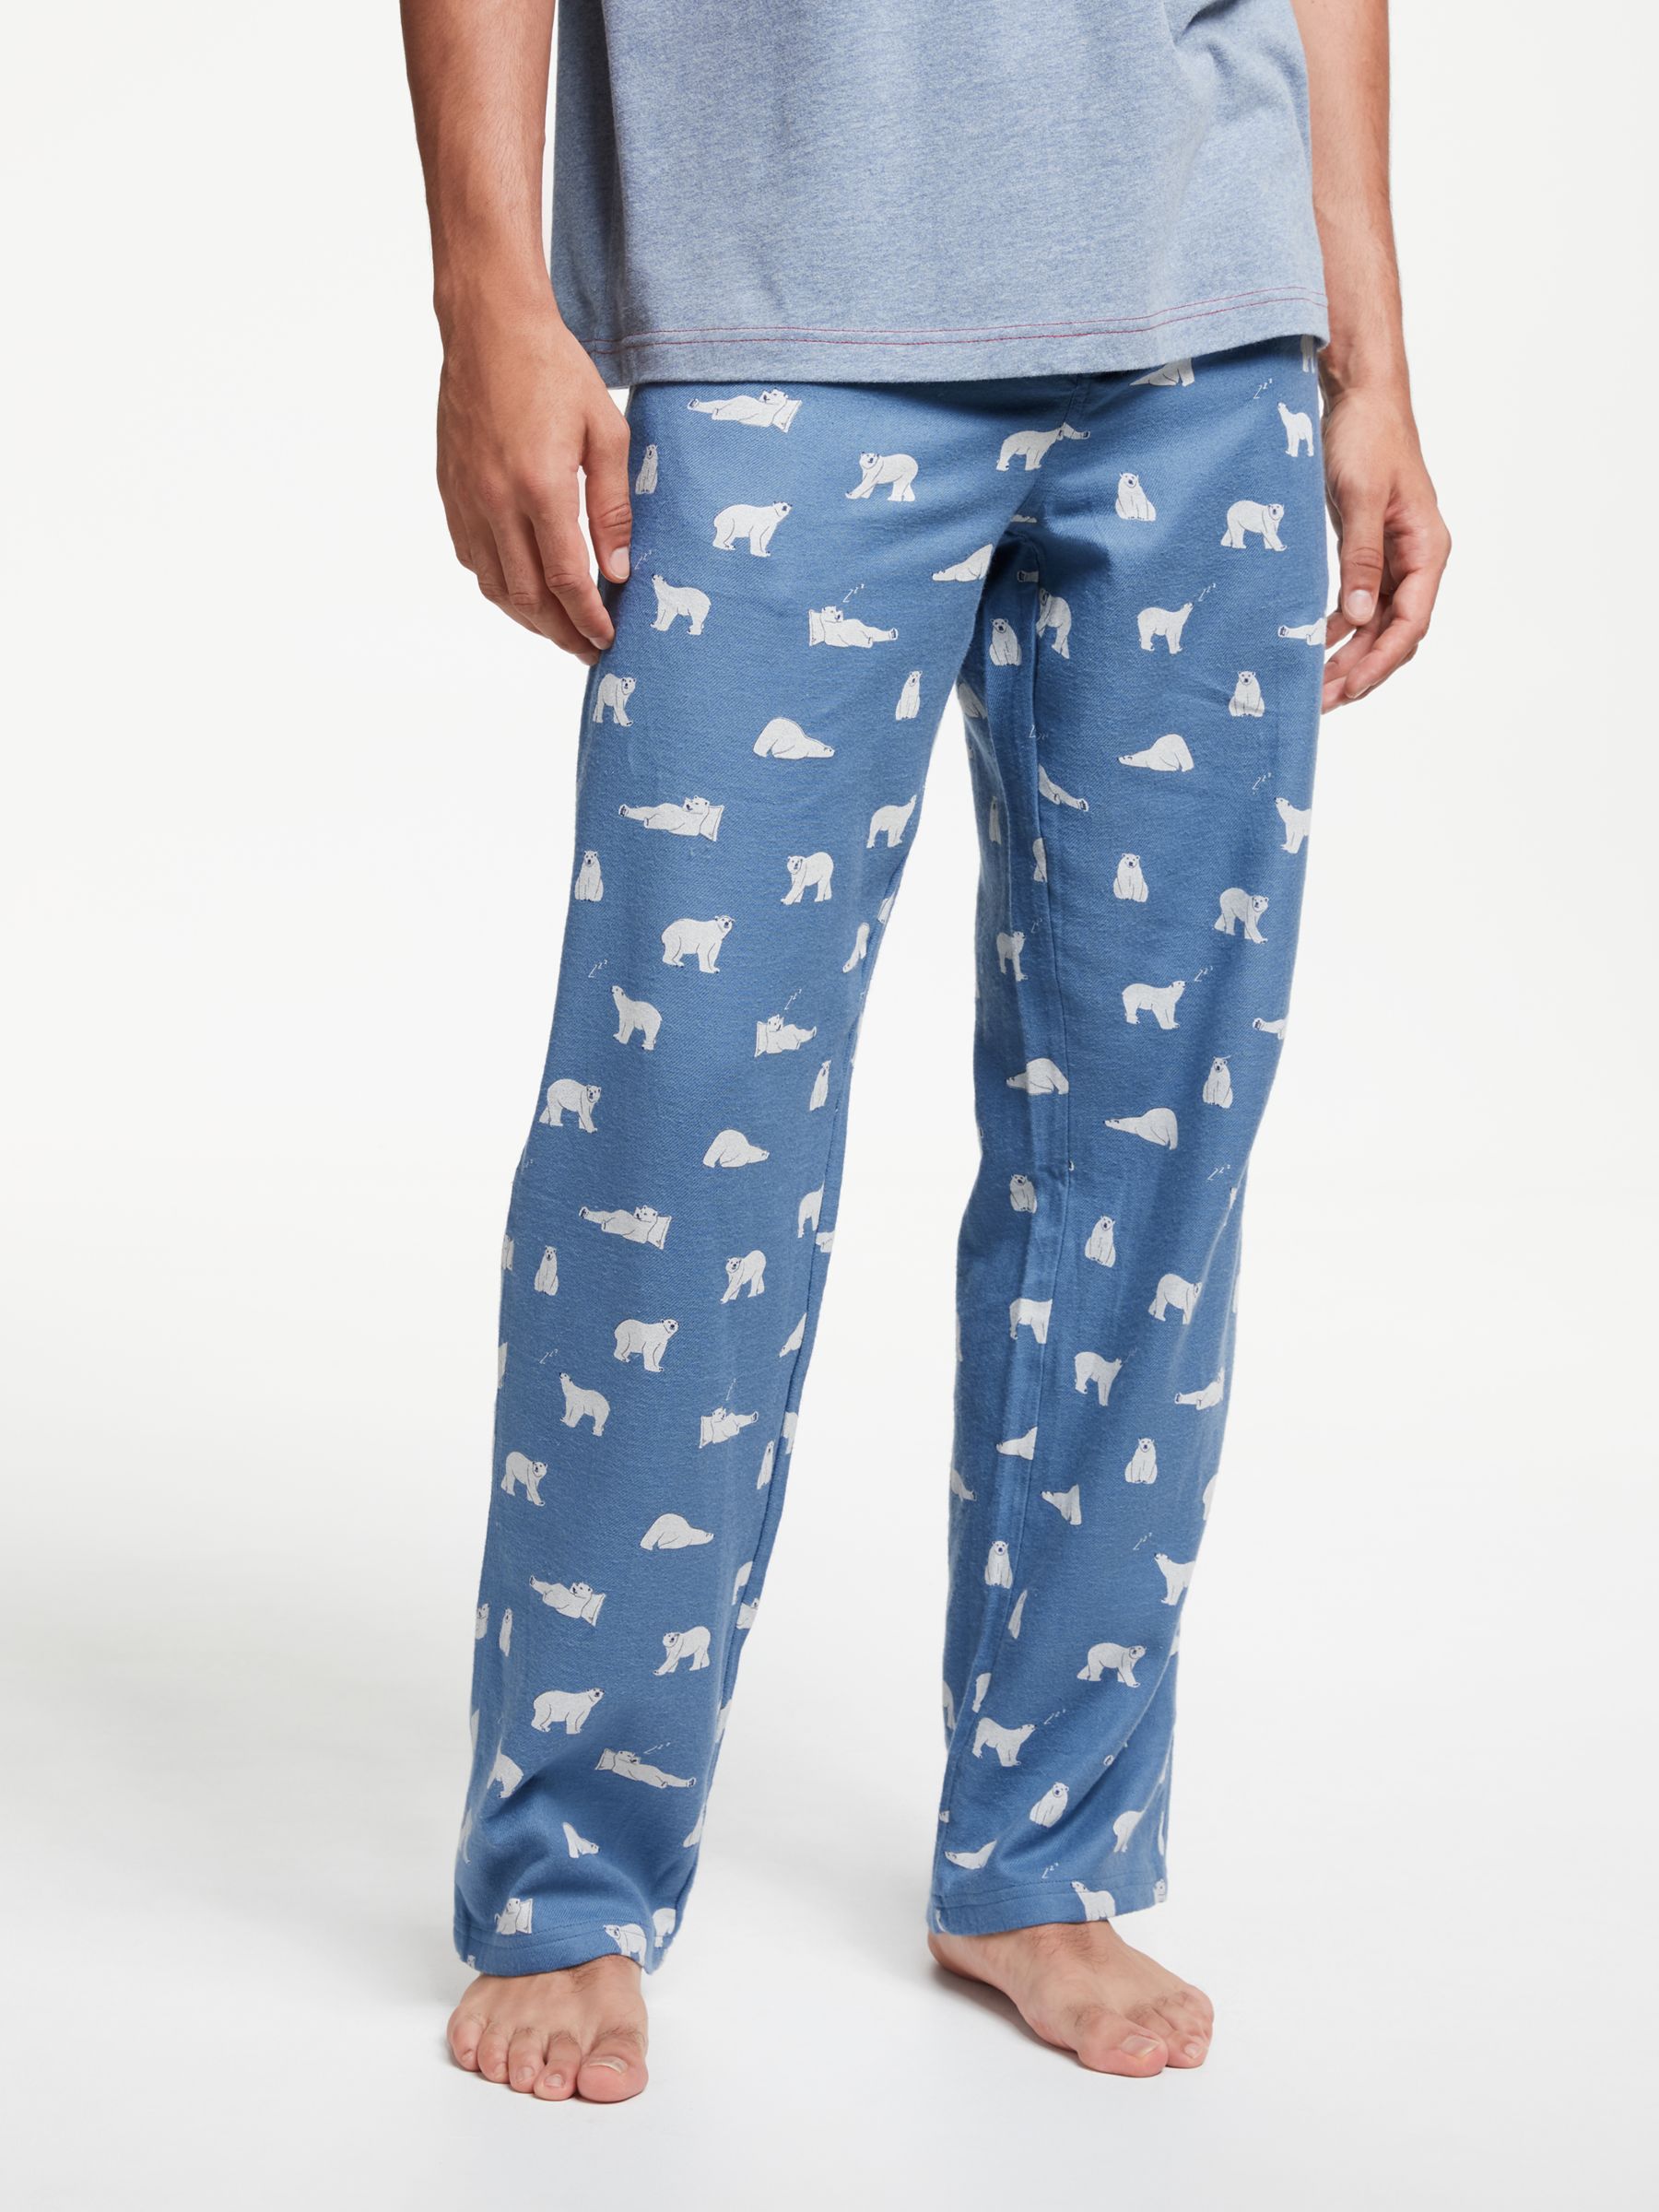 John Lewis & Partners Polar Bear Print Pyjama Bottoms, Blue, S